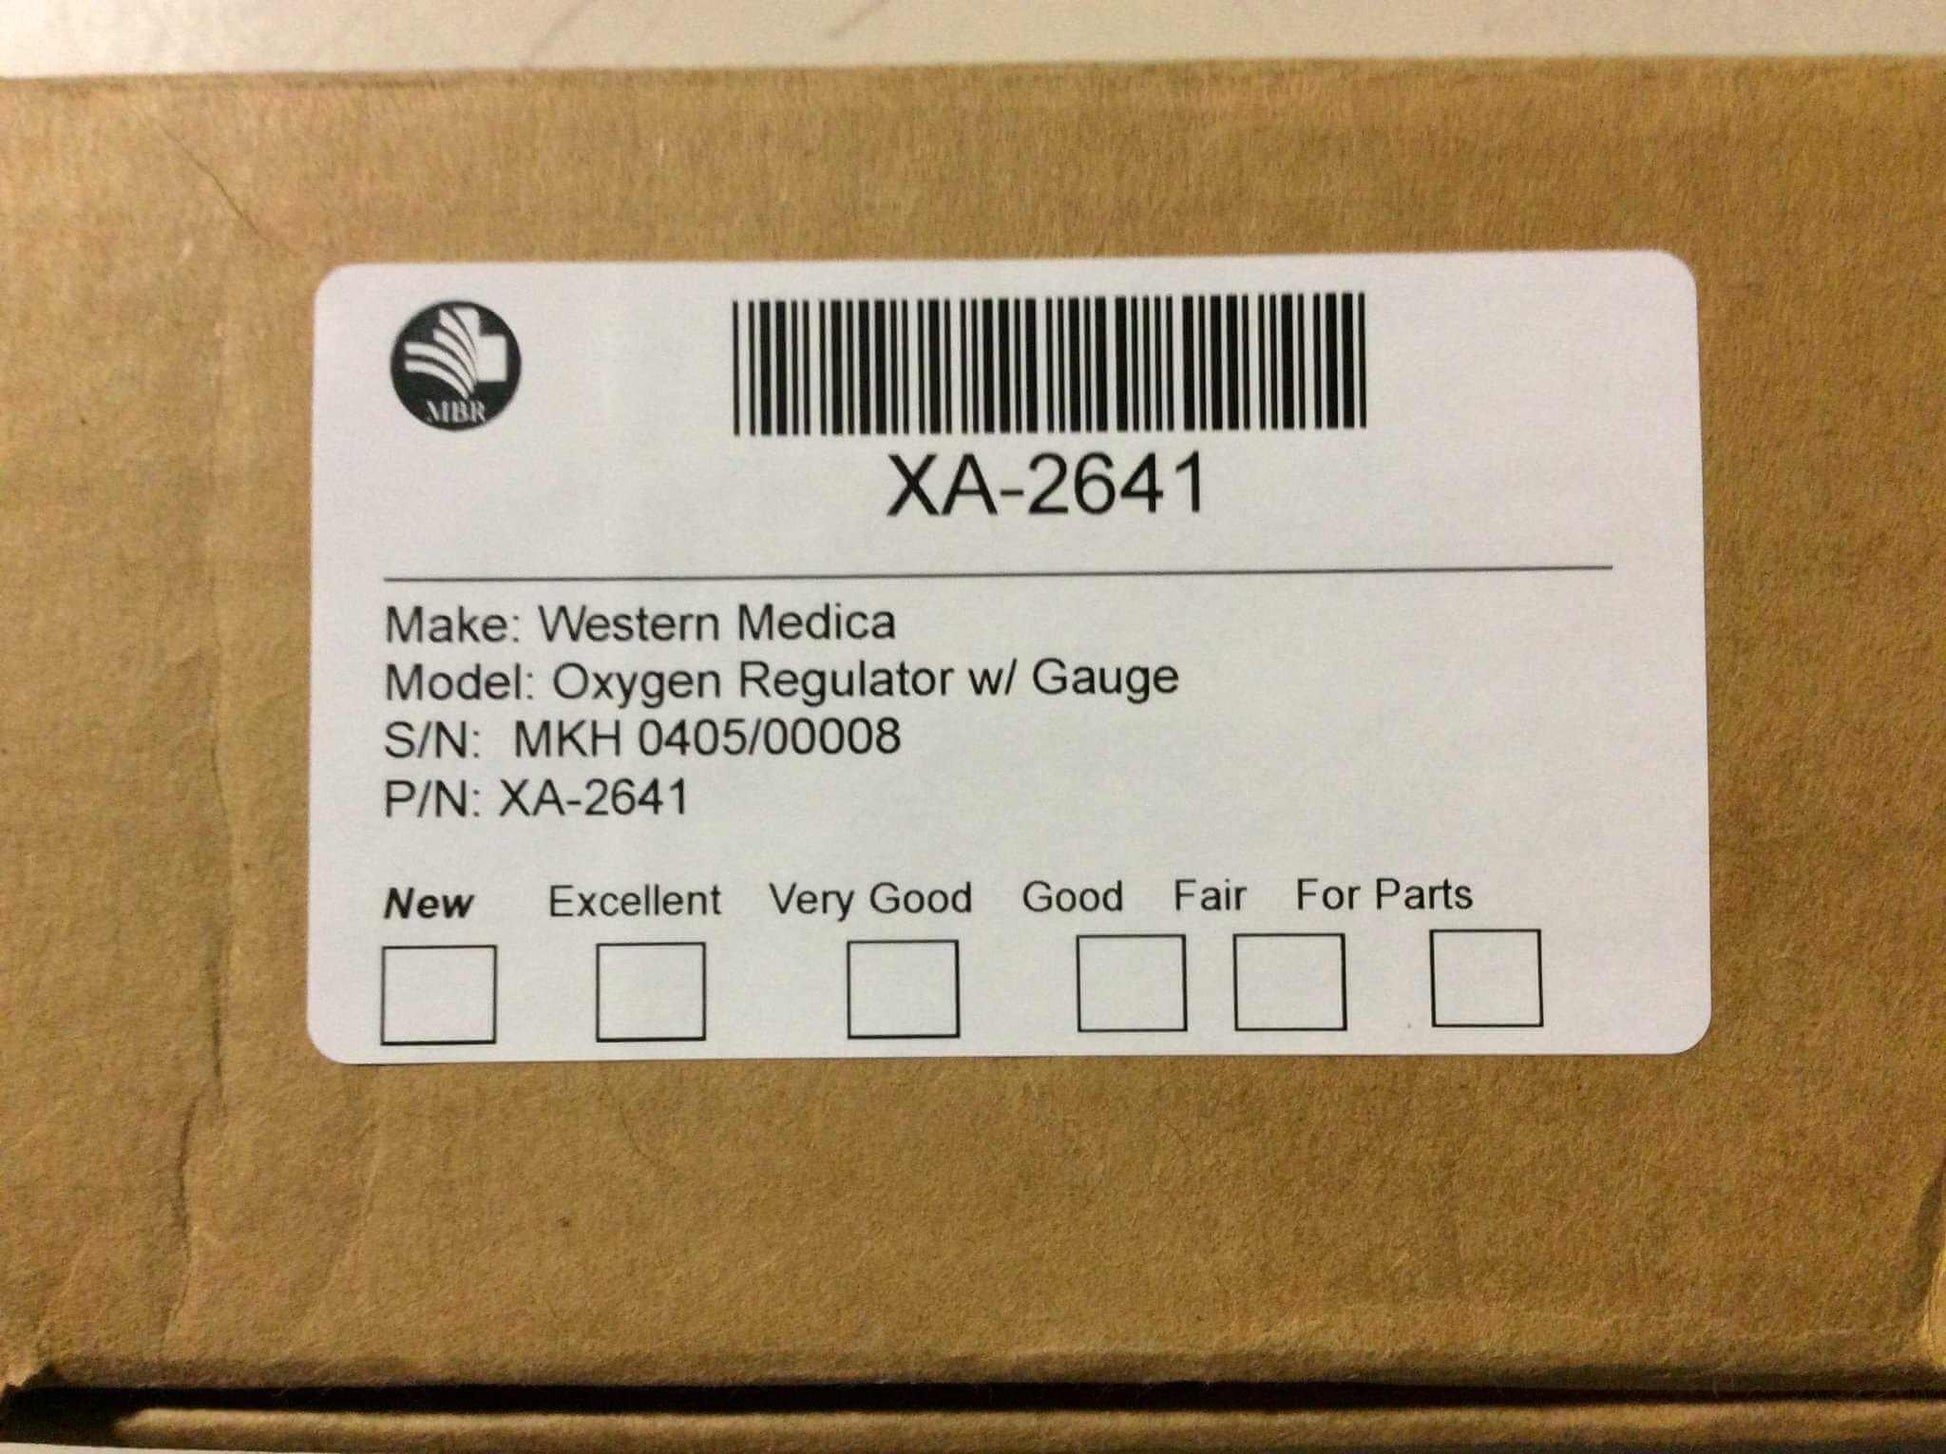 NEW Western Medica Medical Regulator with Gauge XA-2641 Warranty FREE Shipping - MBR Medicals